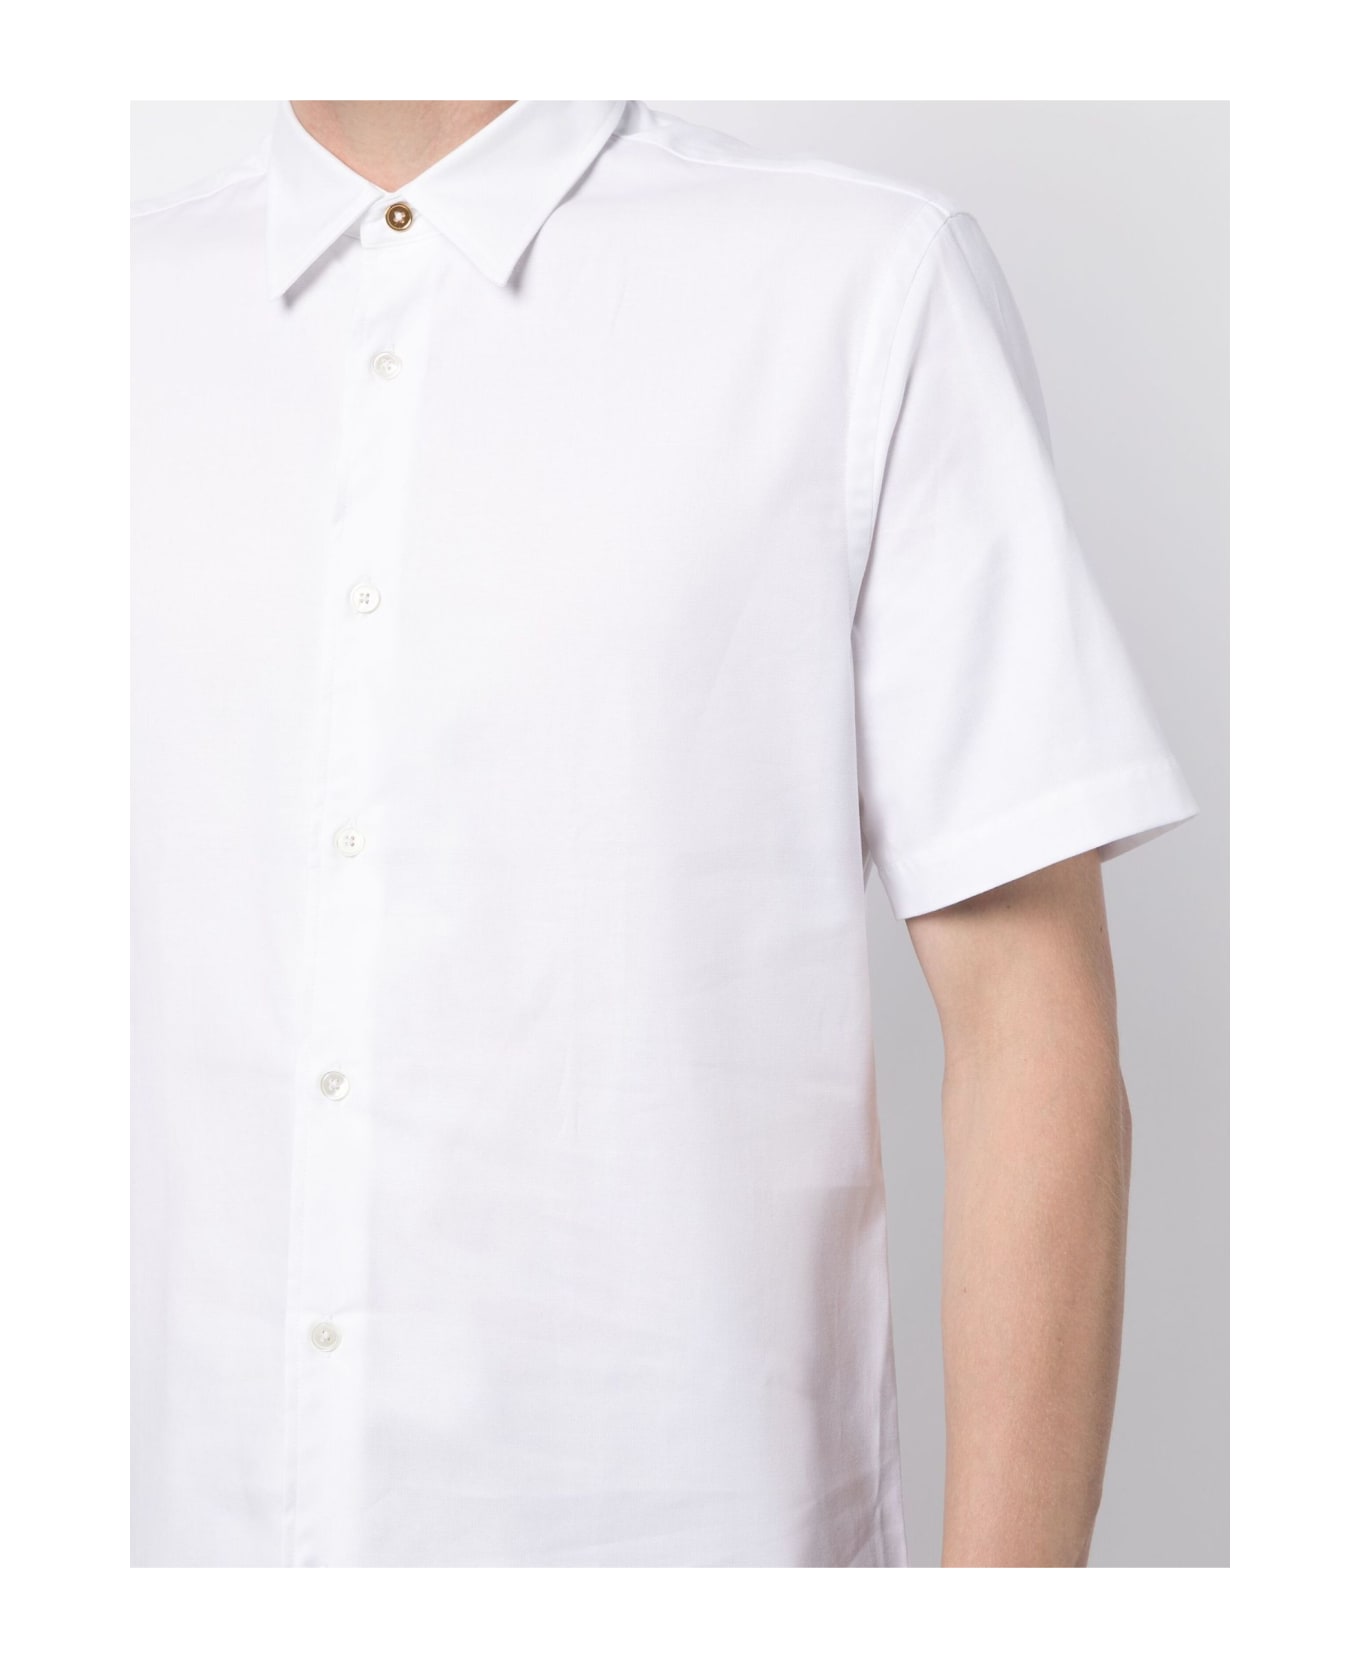 Paul Smith Shirts White - White シャツ